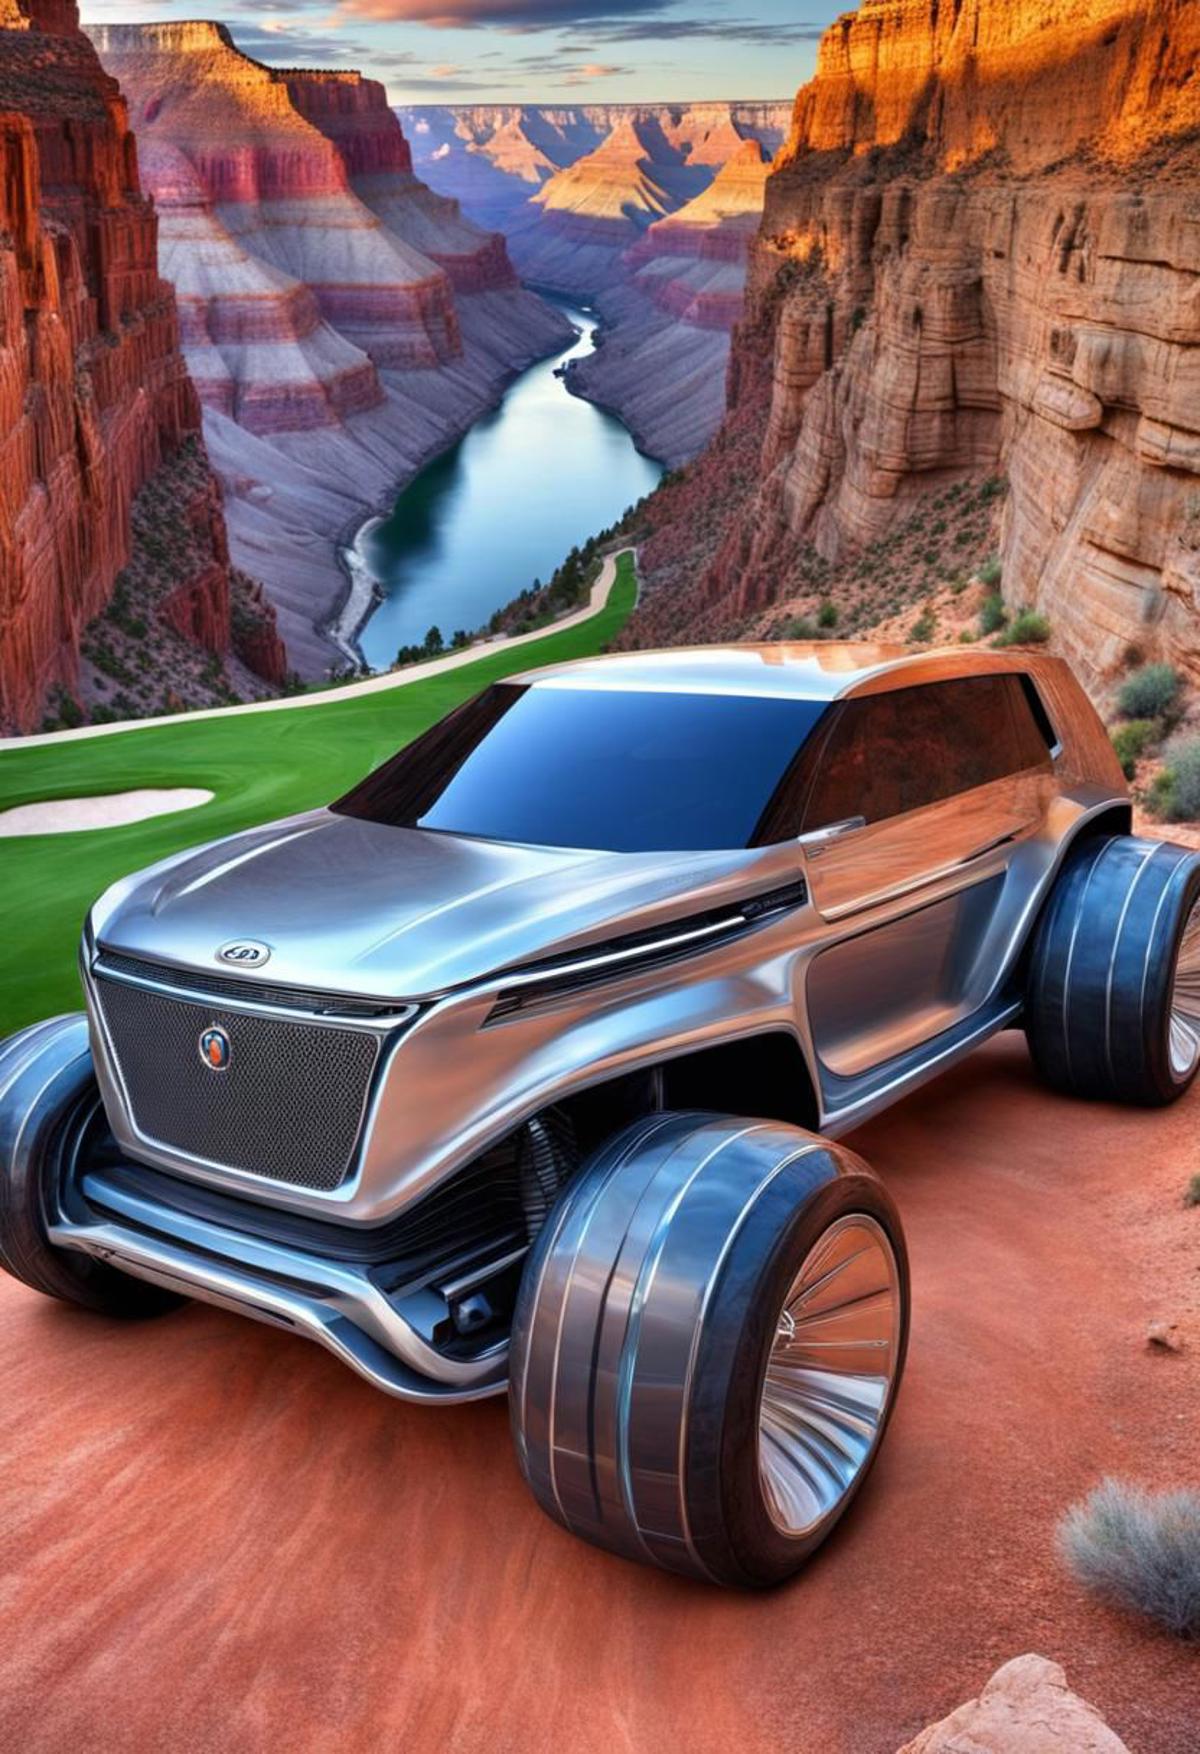 futuristic_cars_SDXL image by R4dW0lf